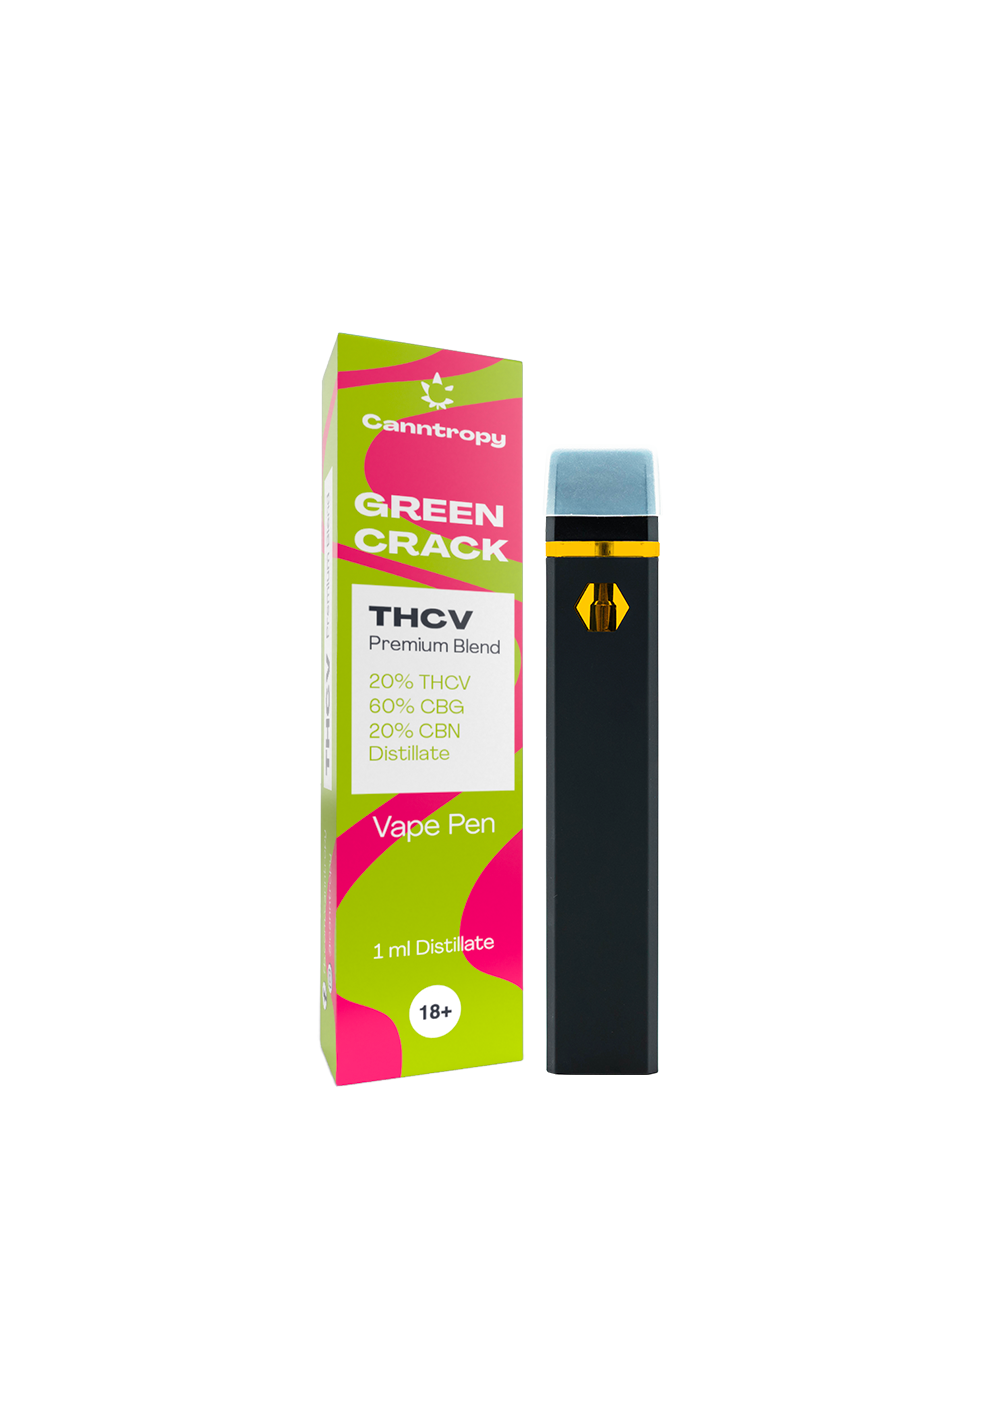 THC-V Disposable Vape Pen - Green Crack, 1ml, 500 puffs - THCV 20%, CBG 60%, CBN 20% - Canntropy